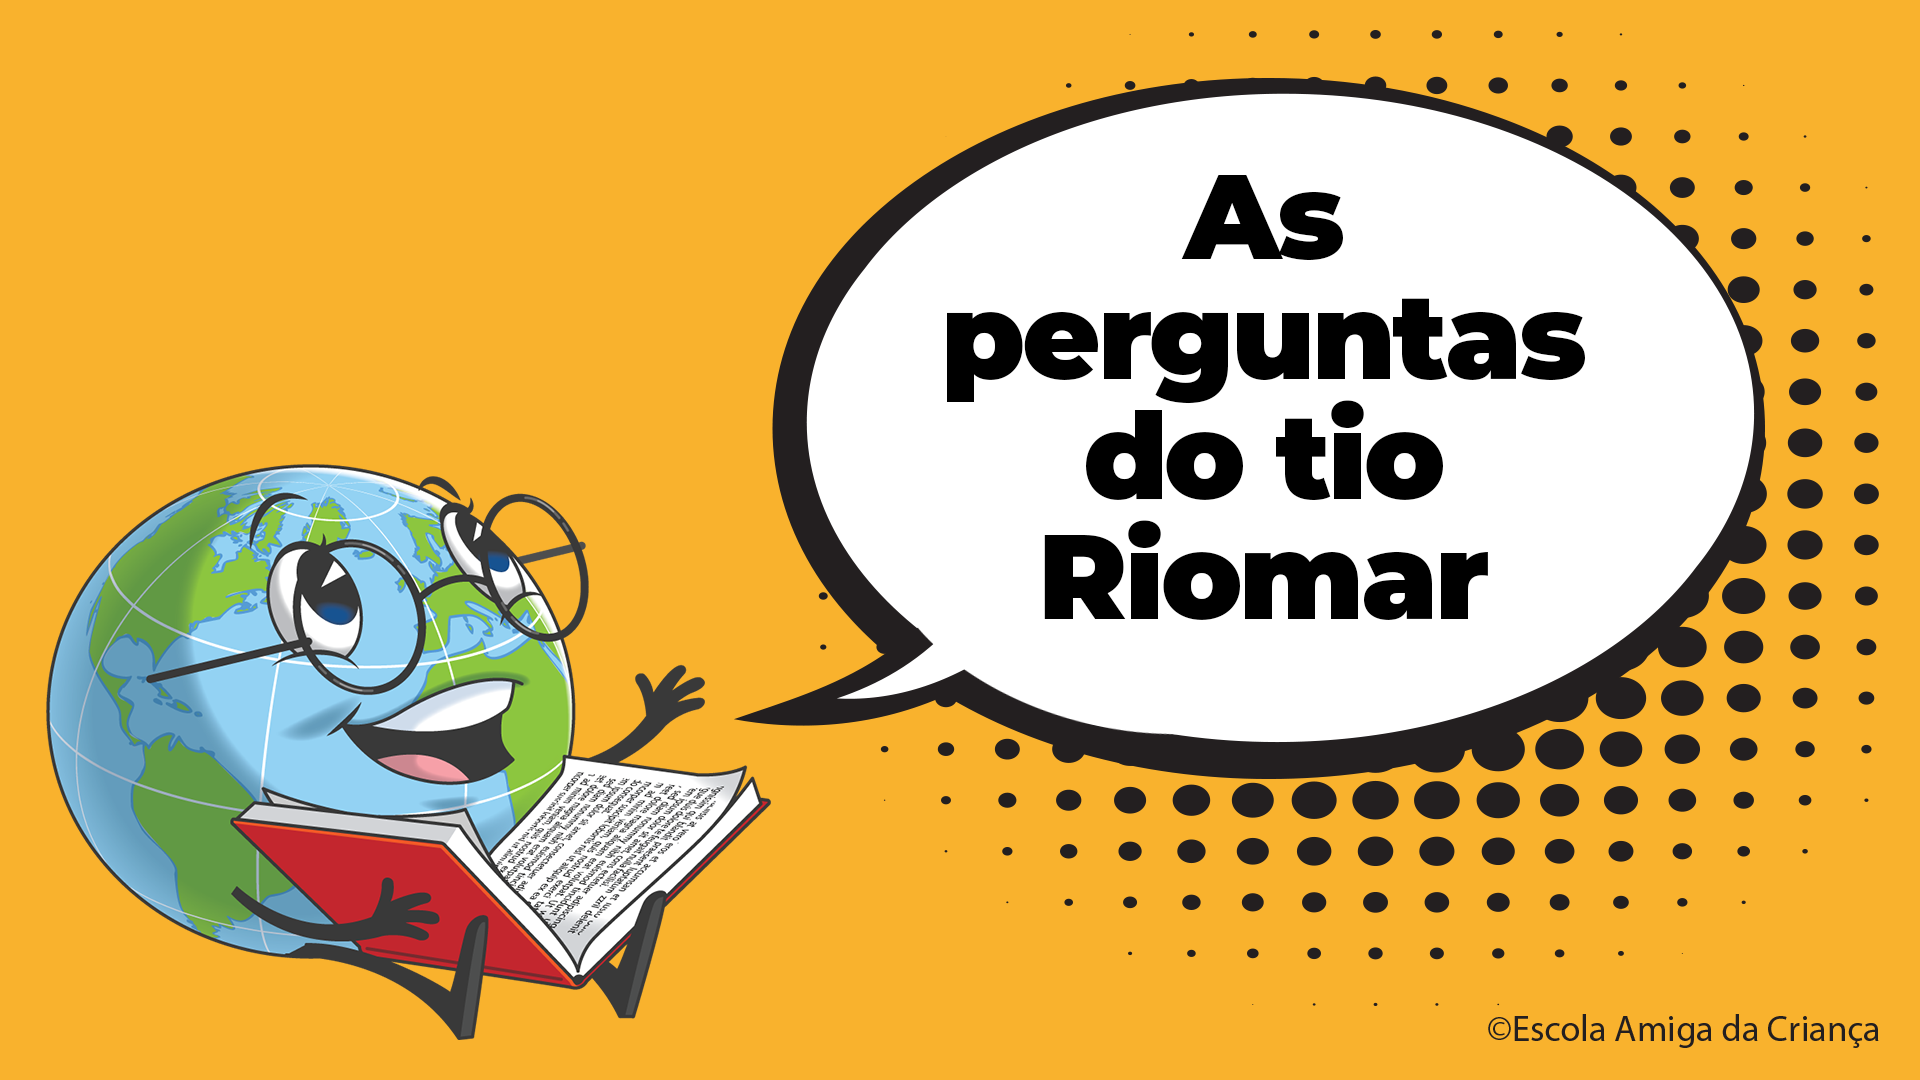 As perguntas do tio Riomar